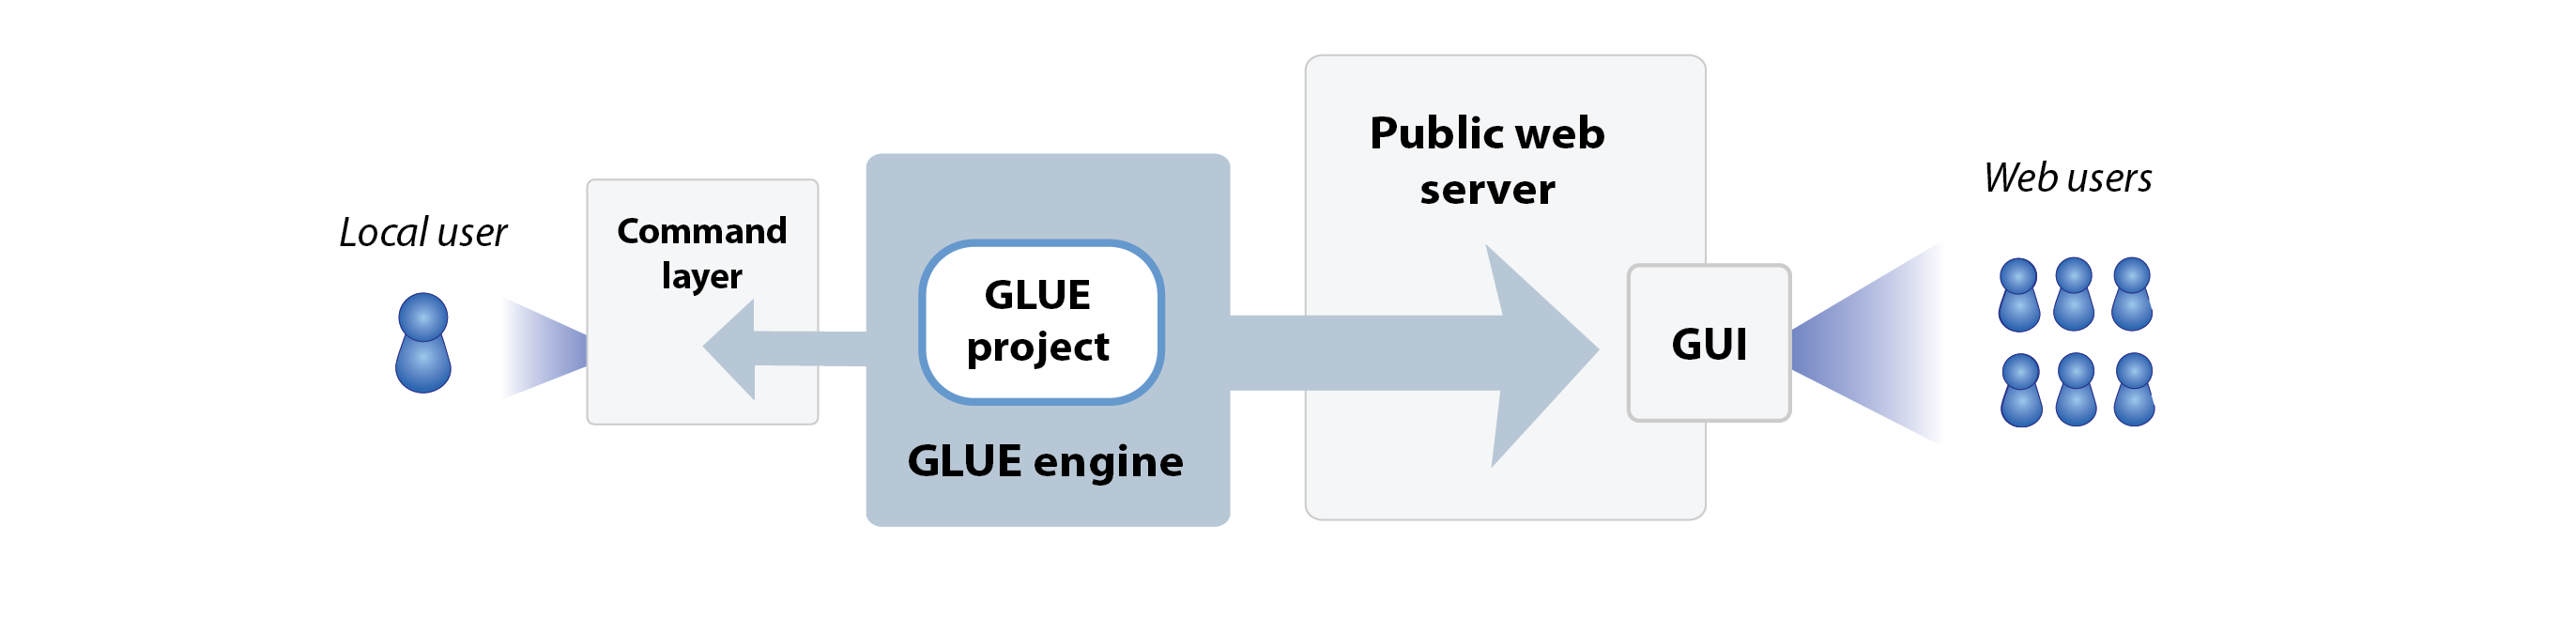 GLUE resources: server deployment illustration